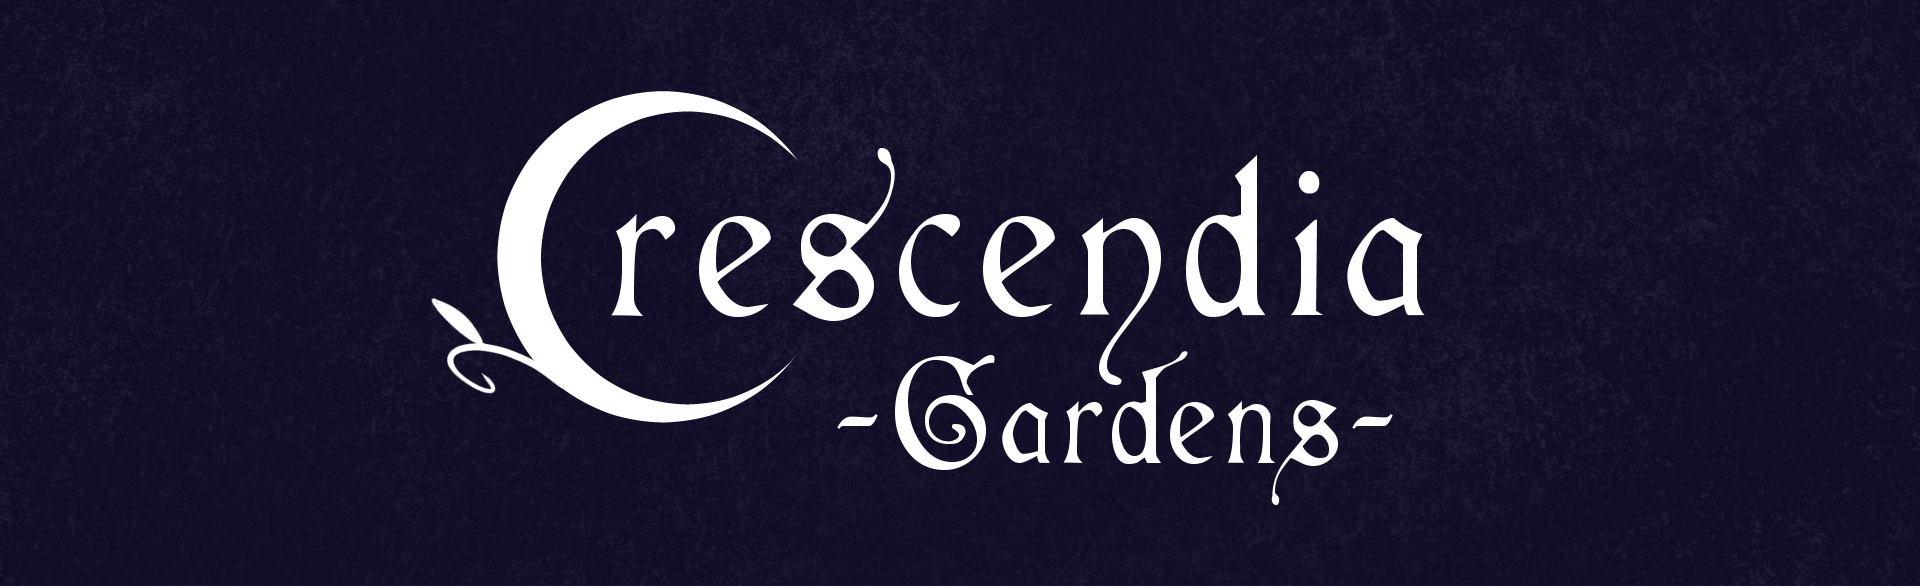 Crescendia Gardens